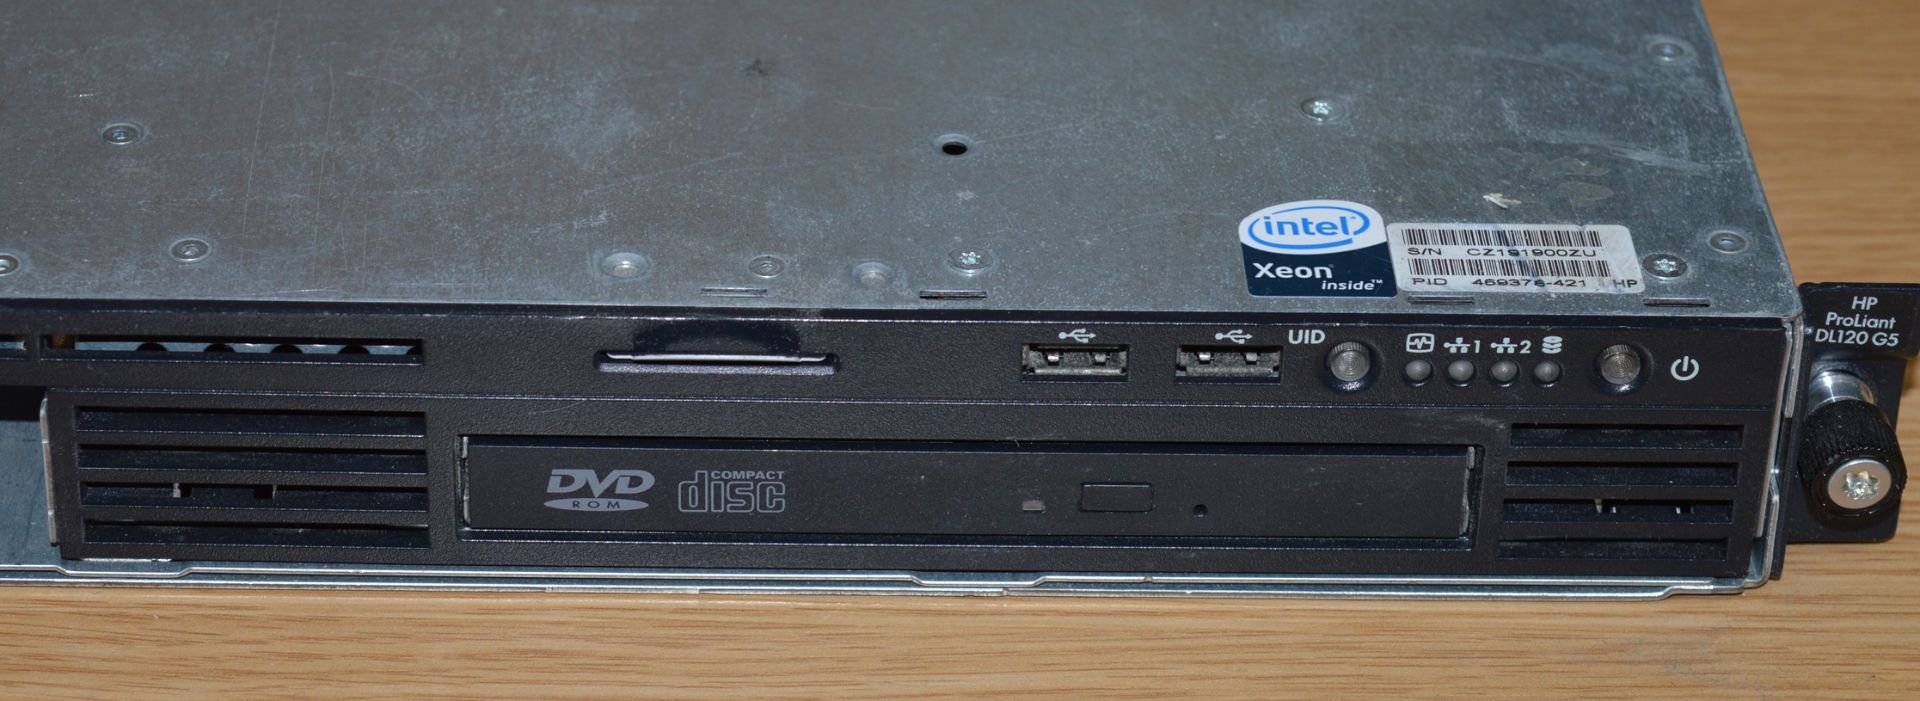 1 x HP Proliant DL120 G5 1U Rackmount File Server - 2 x 2.5ghz Intel Xeon Quad Core Processor - - Bild 2 aus 2